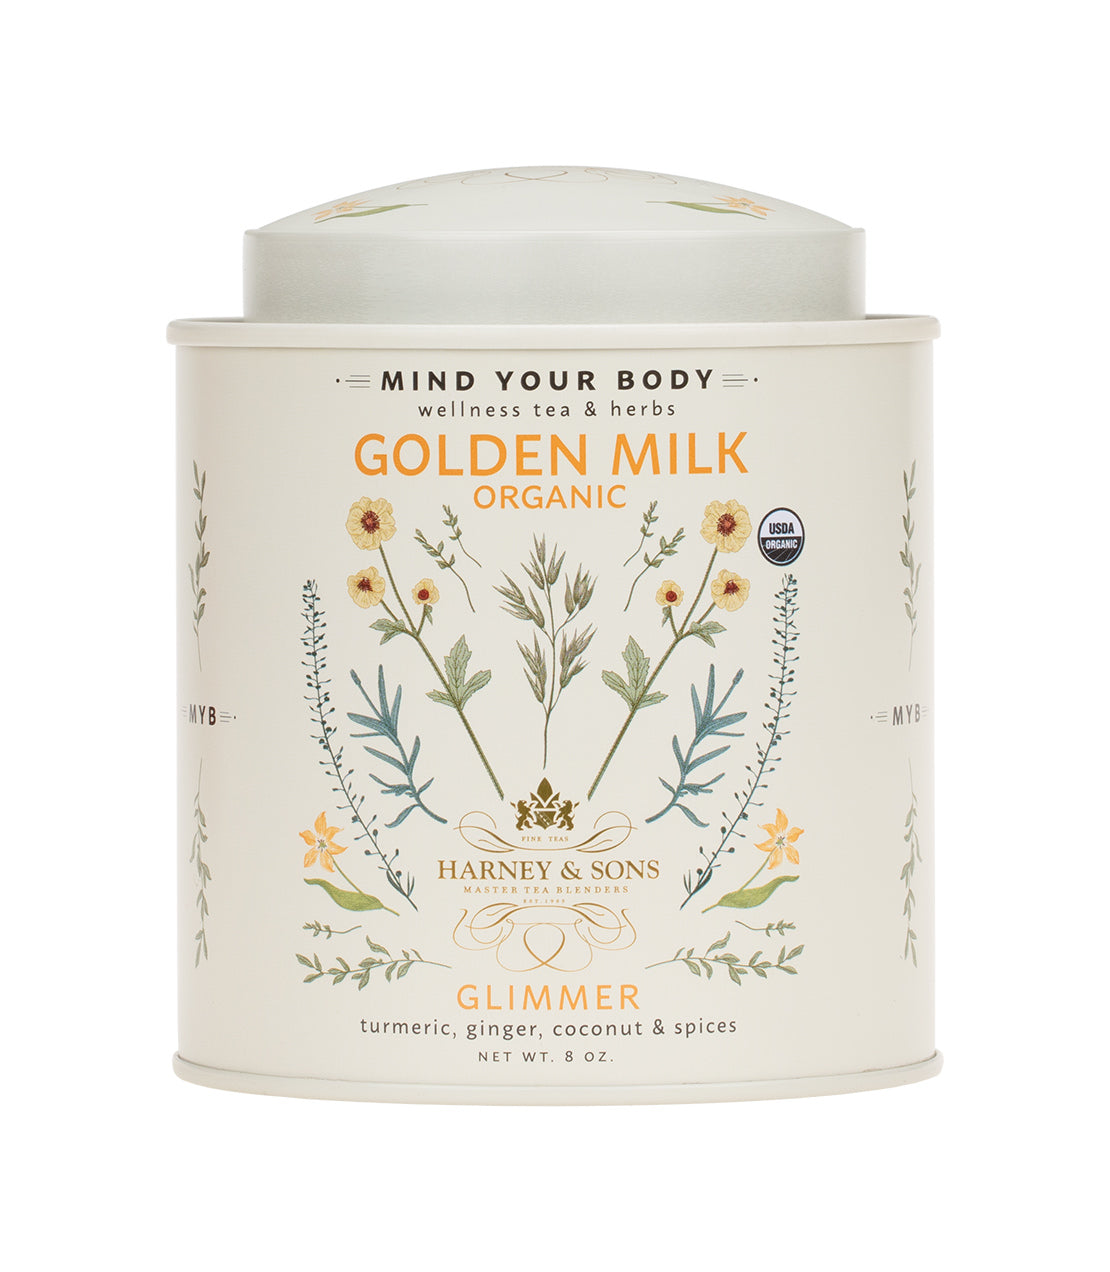 Golden Milk - Glimmer Wellness Blend - Loose 8 oz. Tin - Harney & Sons Fine Teas